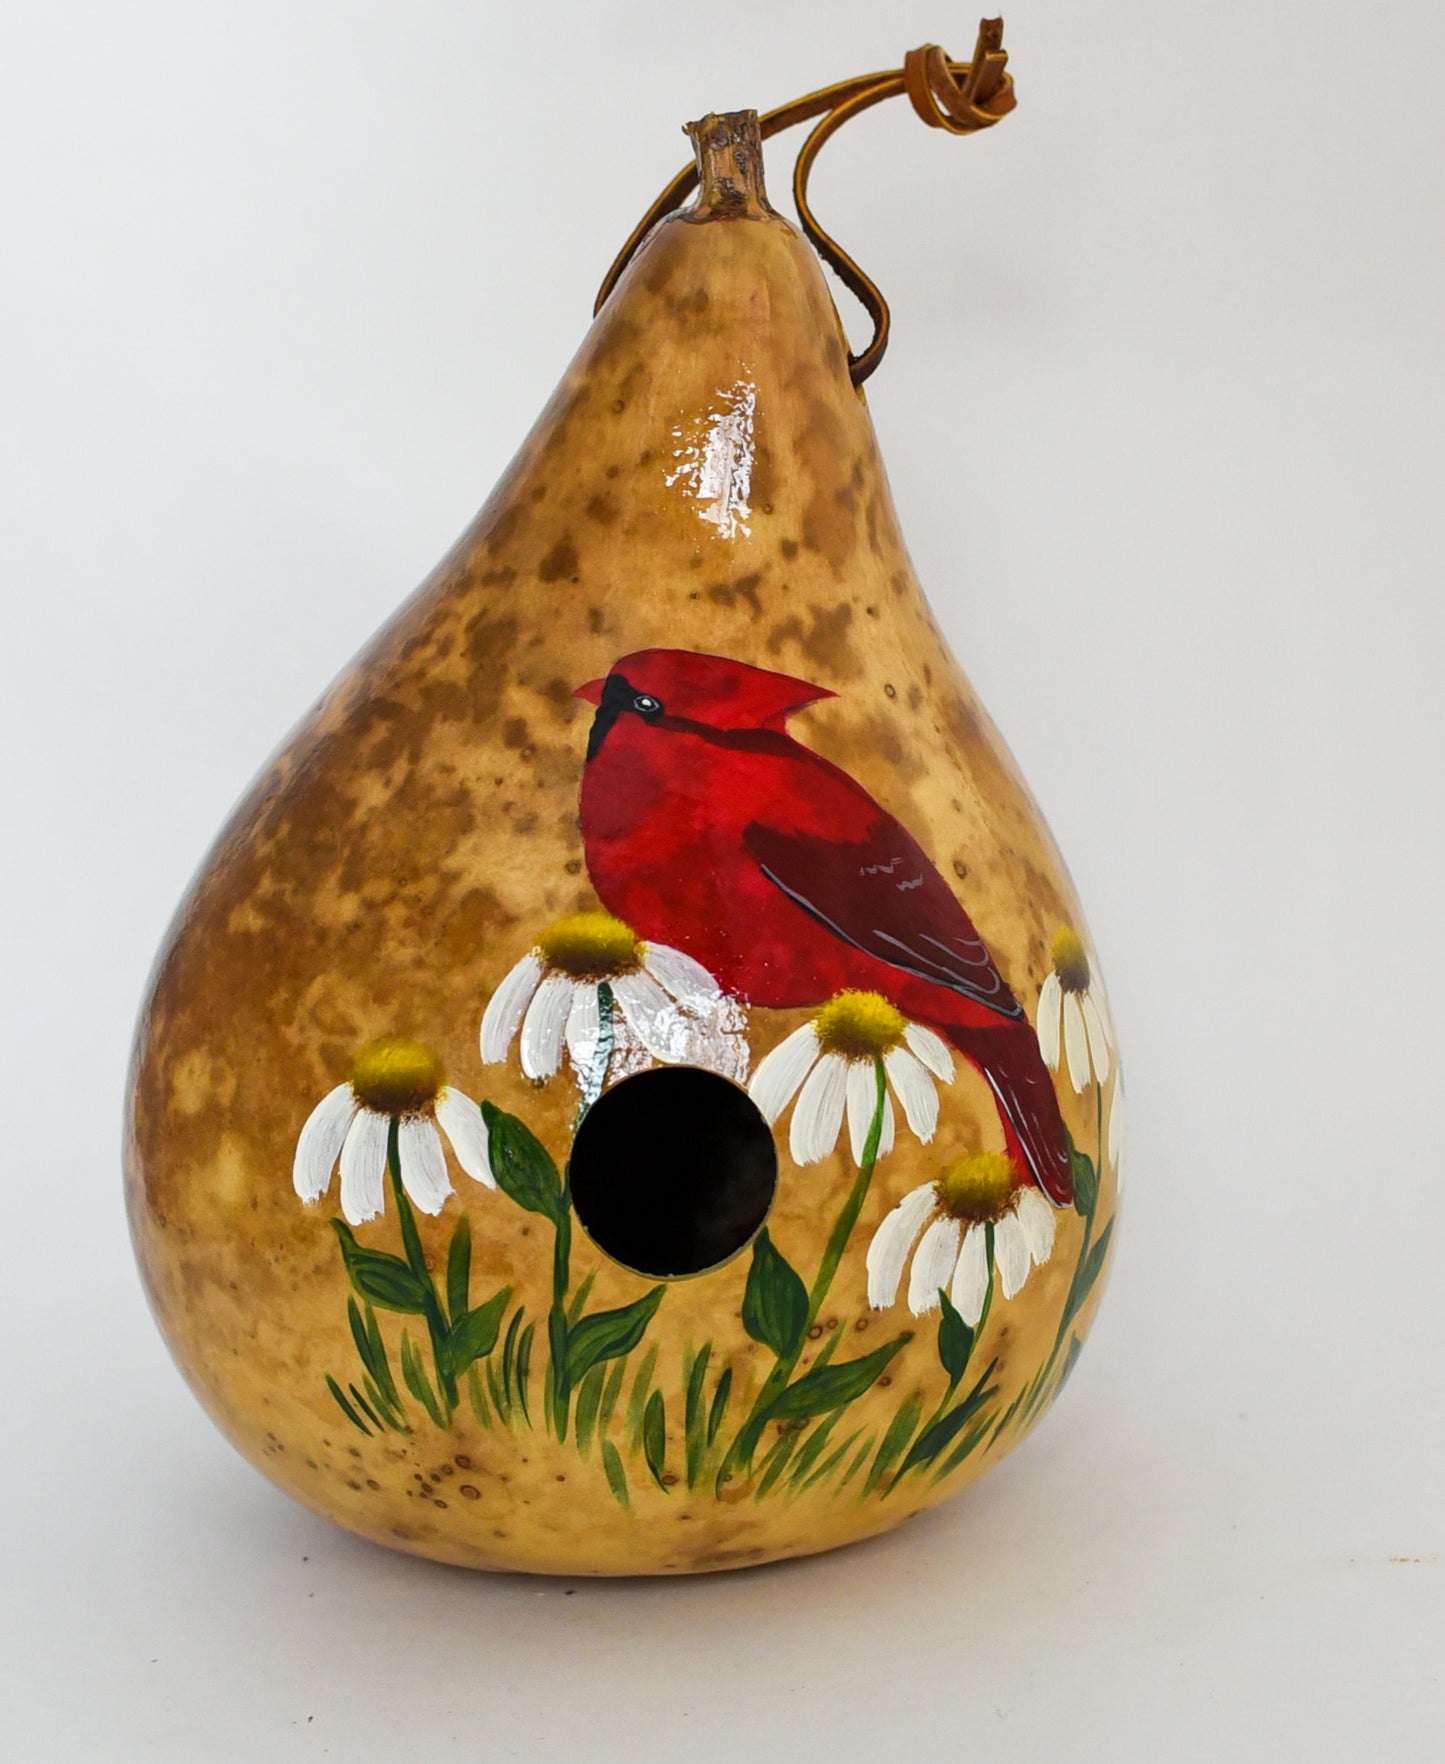 Cardinal Birdhouse Gourd Art, Handpainted Gourd birdhouse for your yard